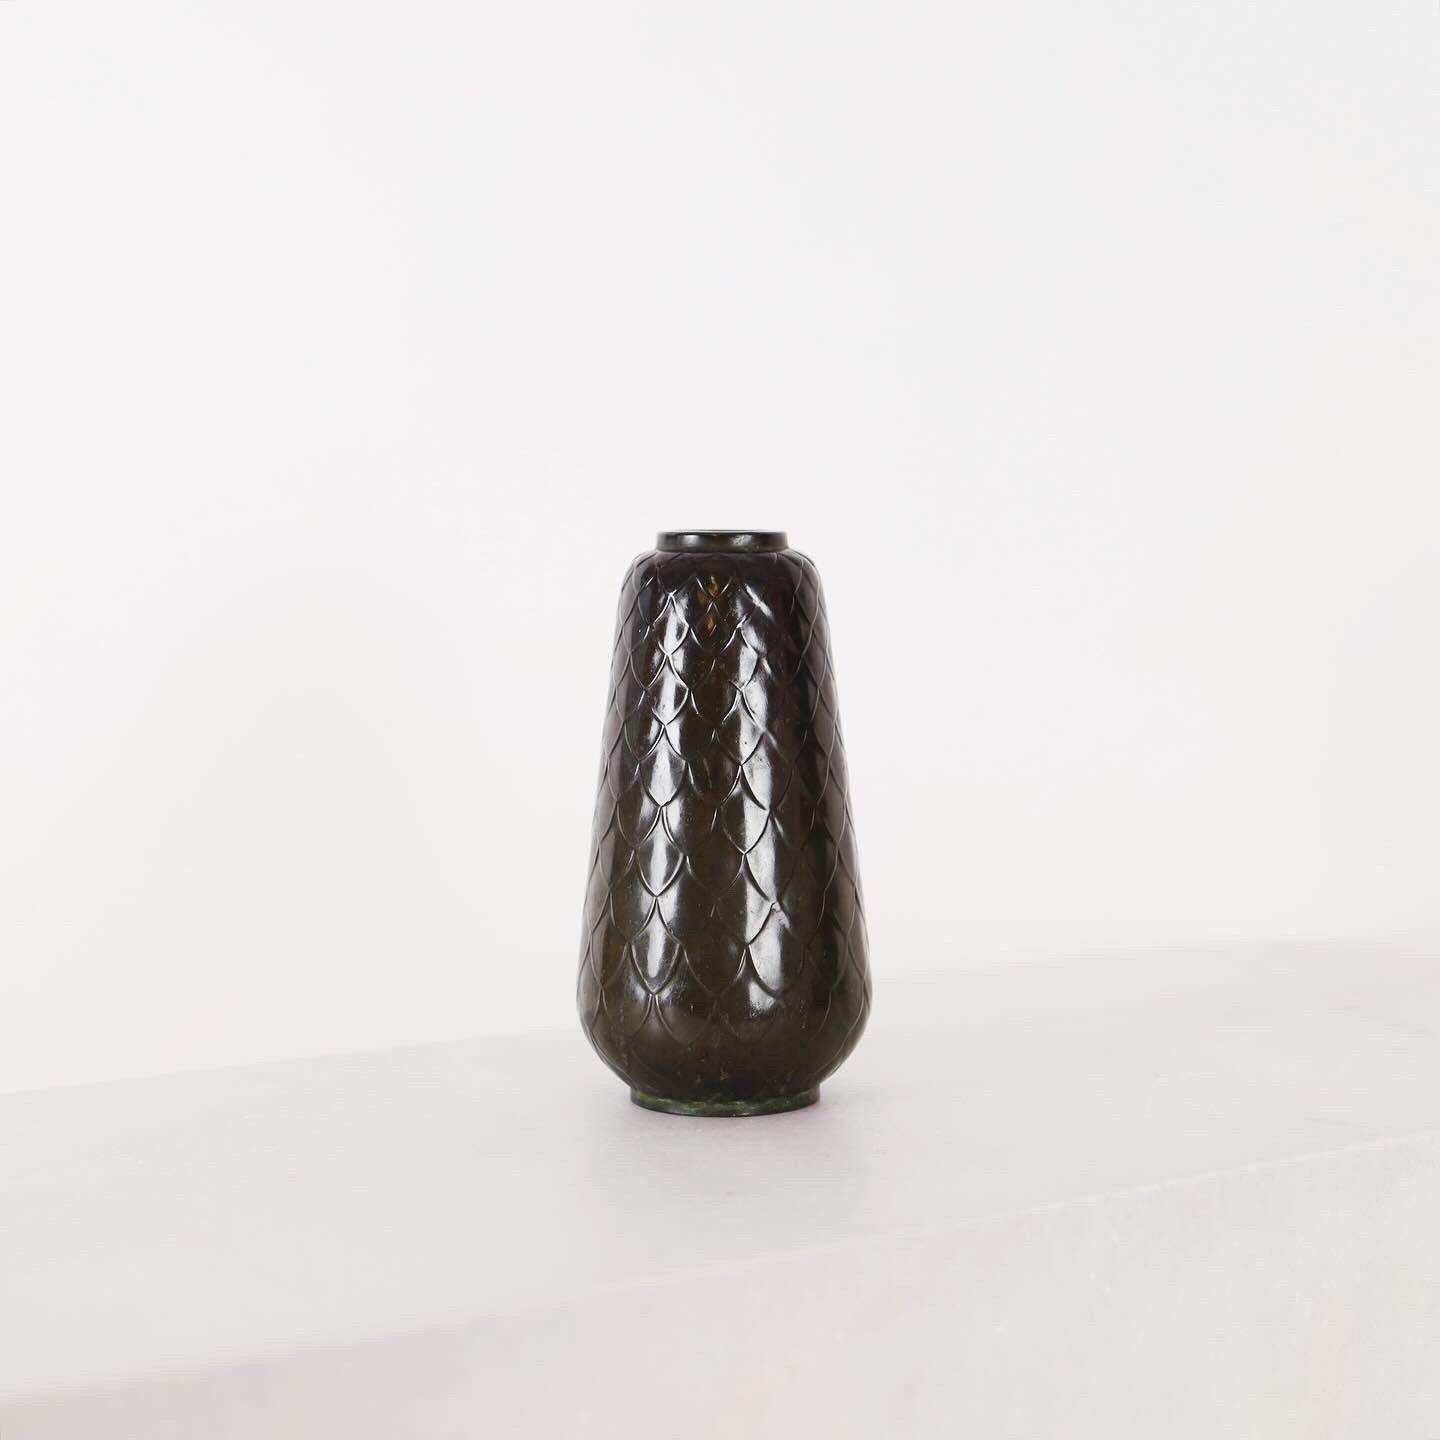 A disco metal vase with snakeskin pattern designed Ellen Schlanbush, who ahead of her time were artistic director for Just Andersen. 

* A metal vase with snakeskin pattern 
* Designer: Ellen Schlanbusch
* Manufacturer: Just Andersen
* Model: D2391